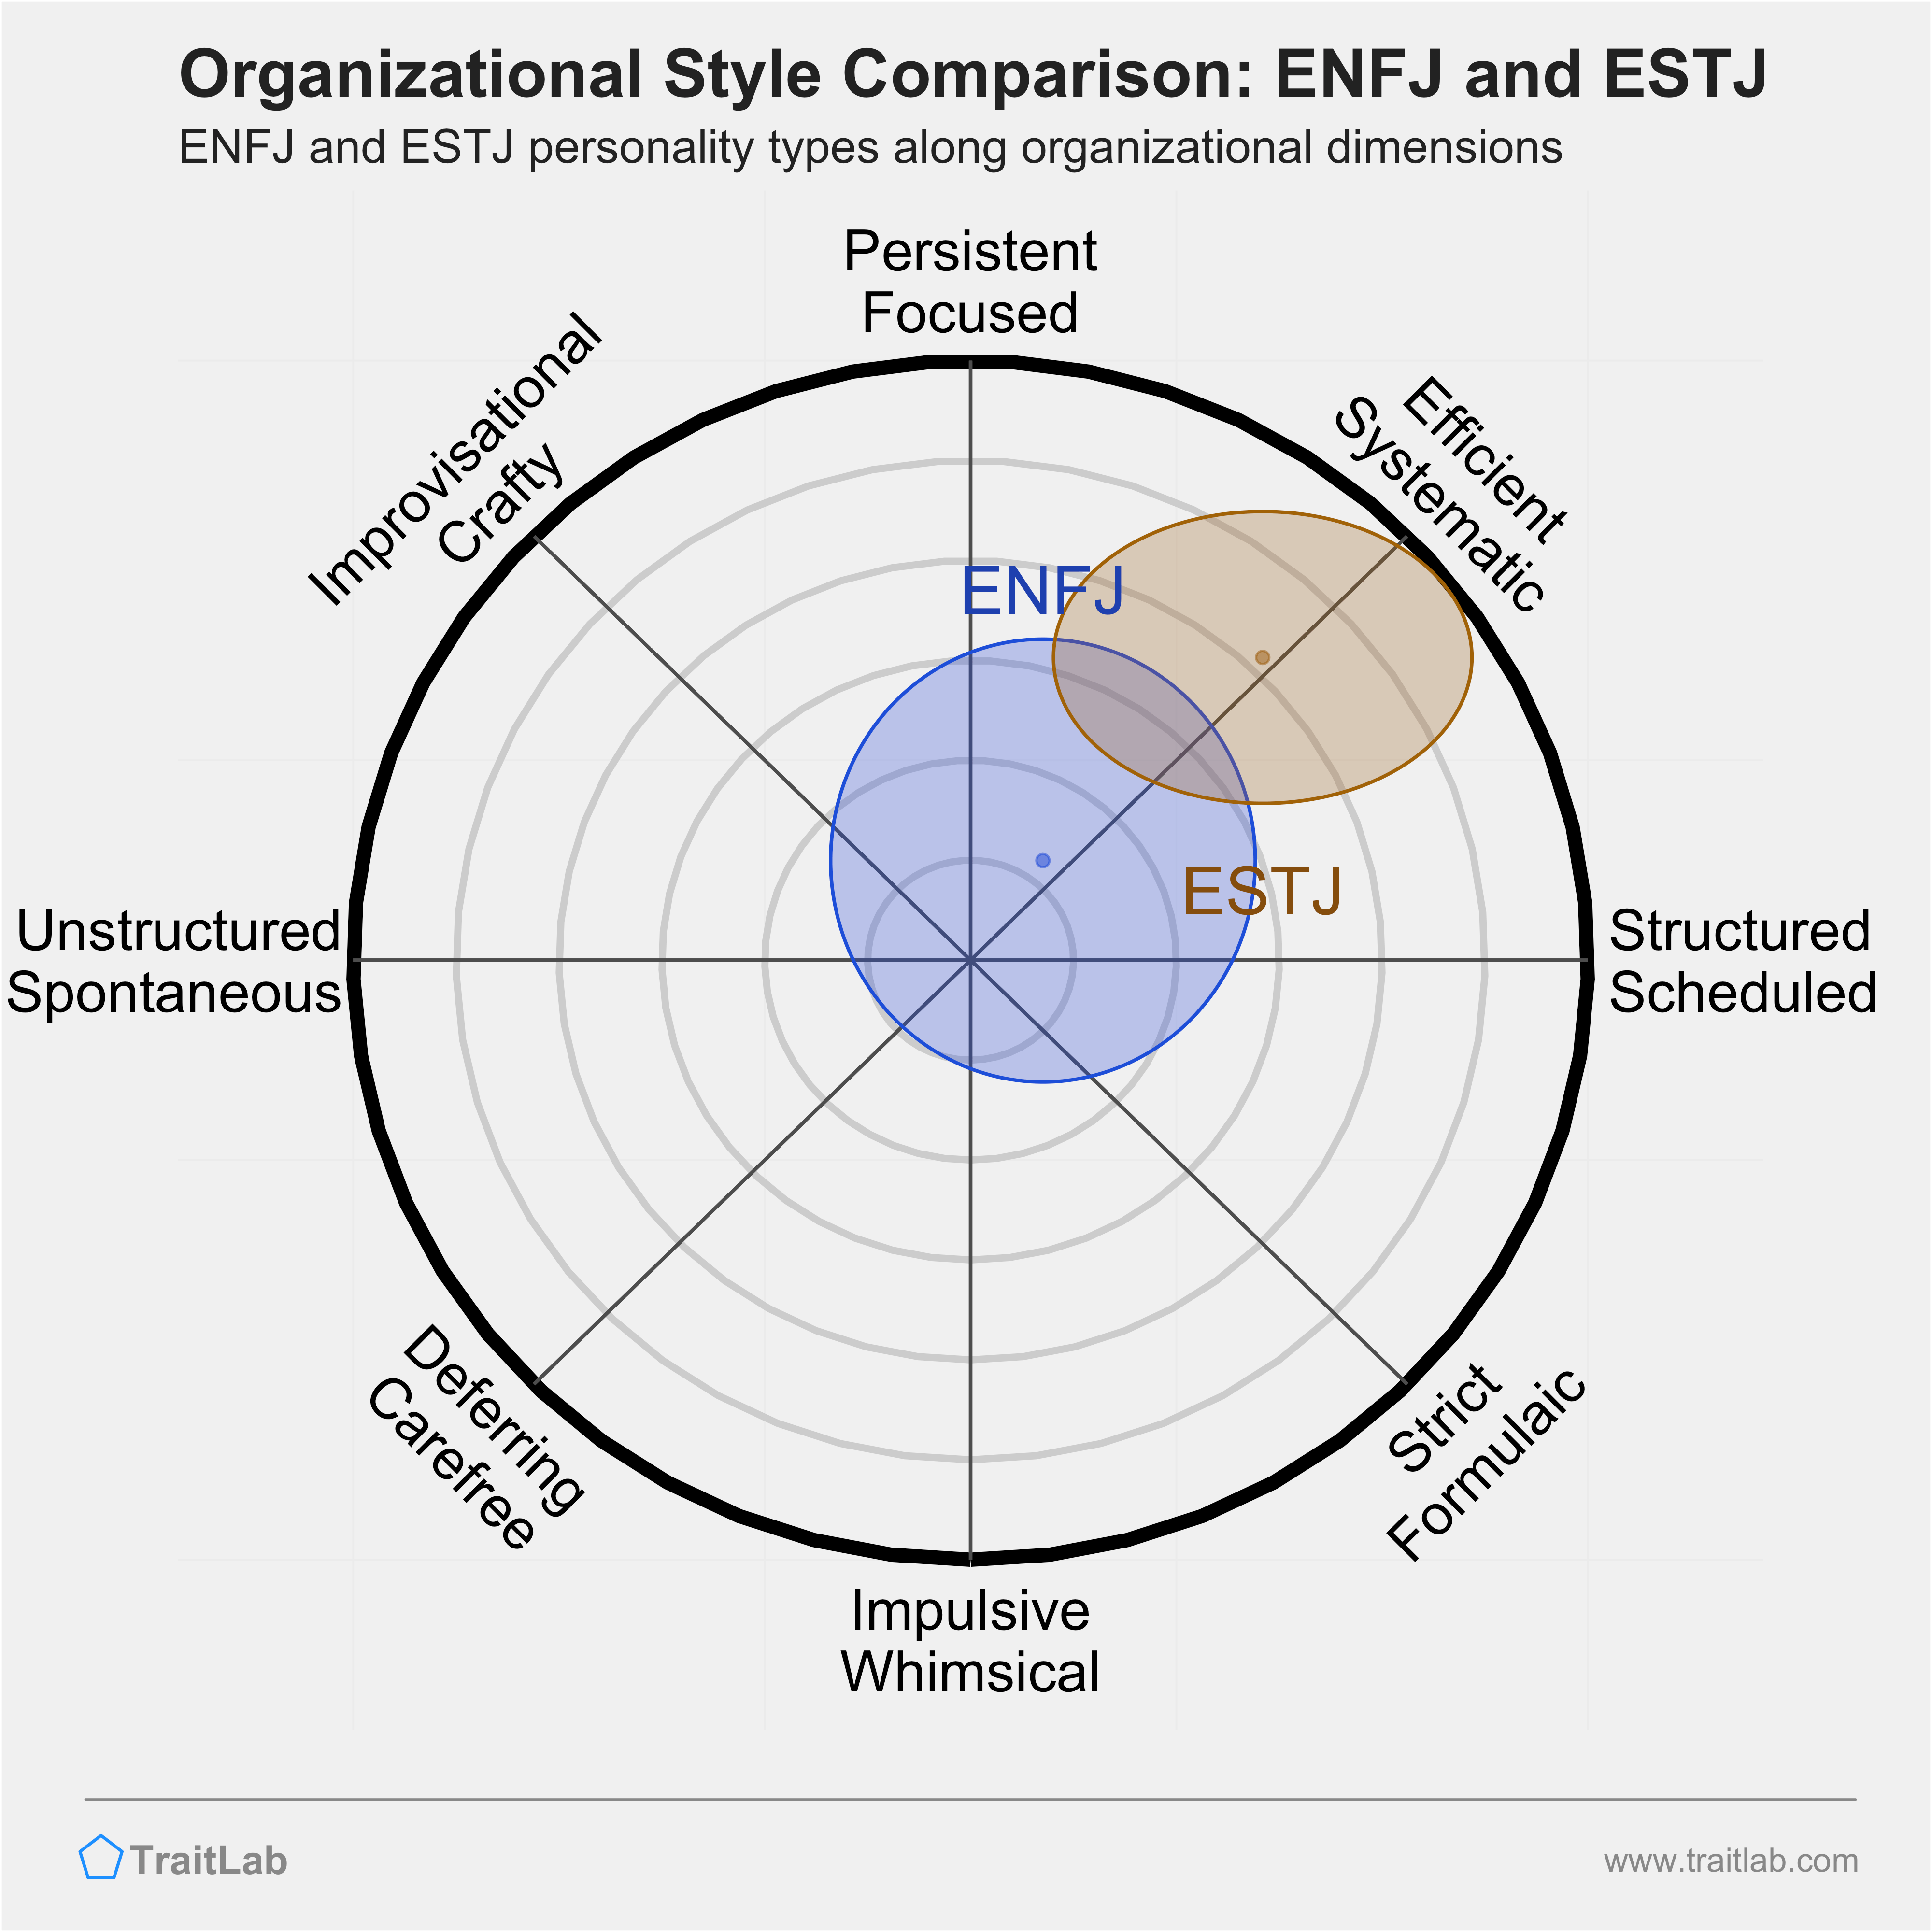 ENFJ and ESTJ comparison across organizational dimensions